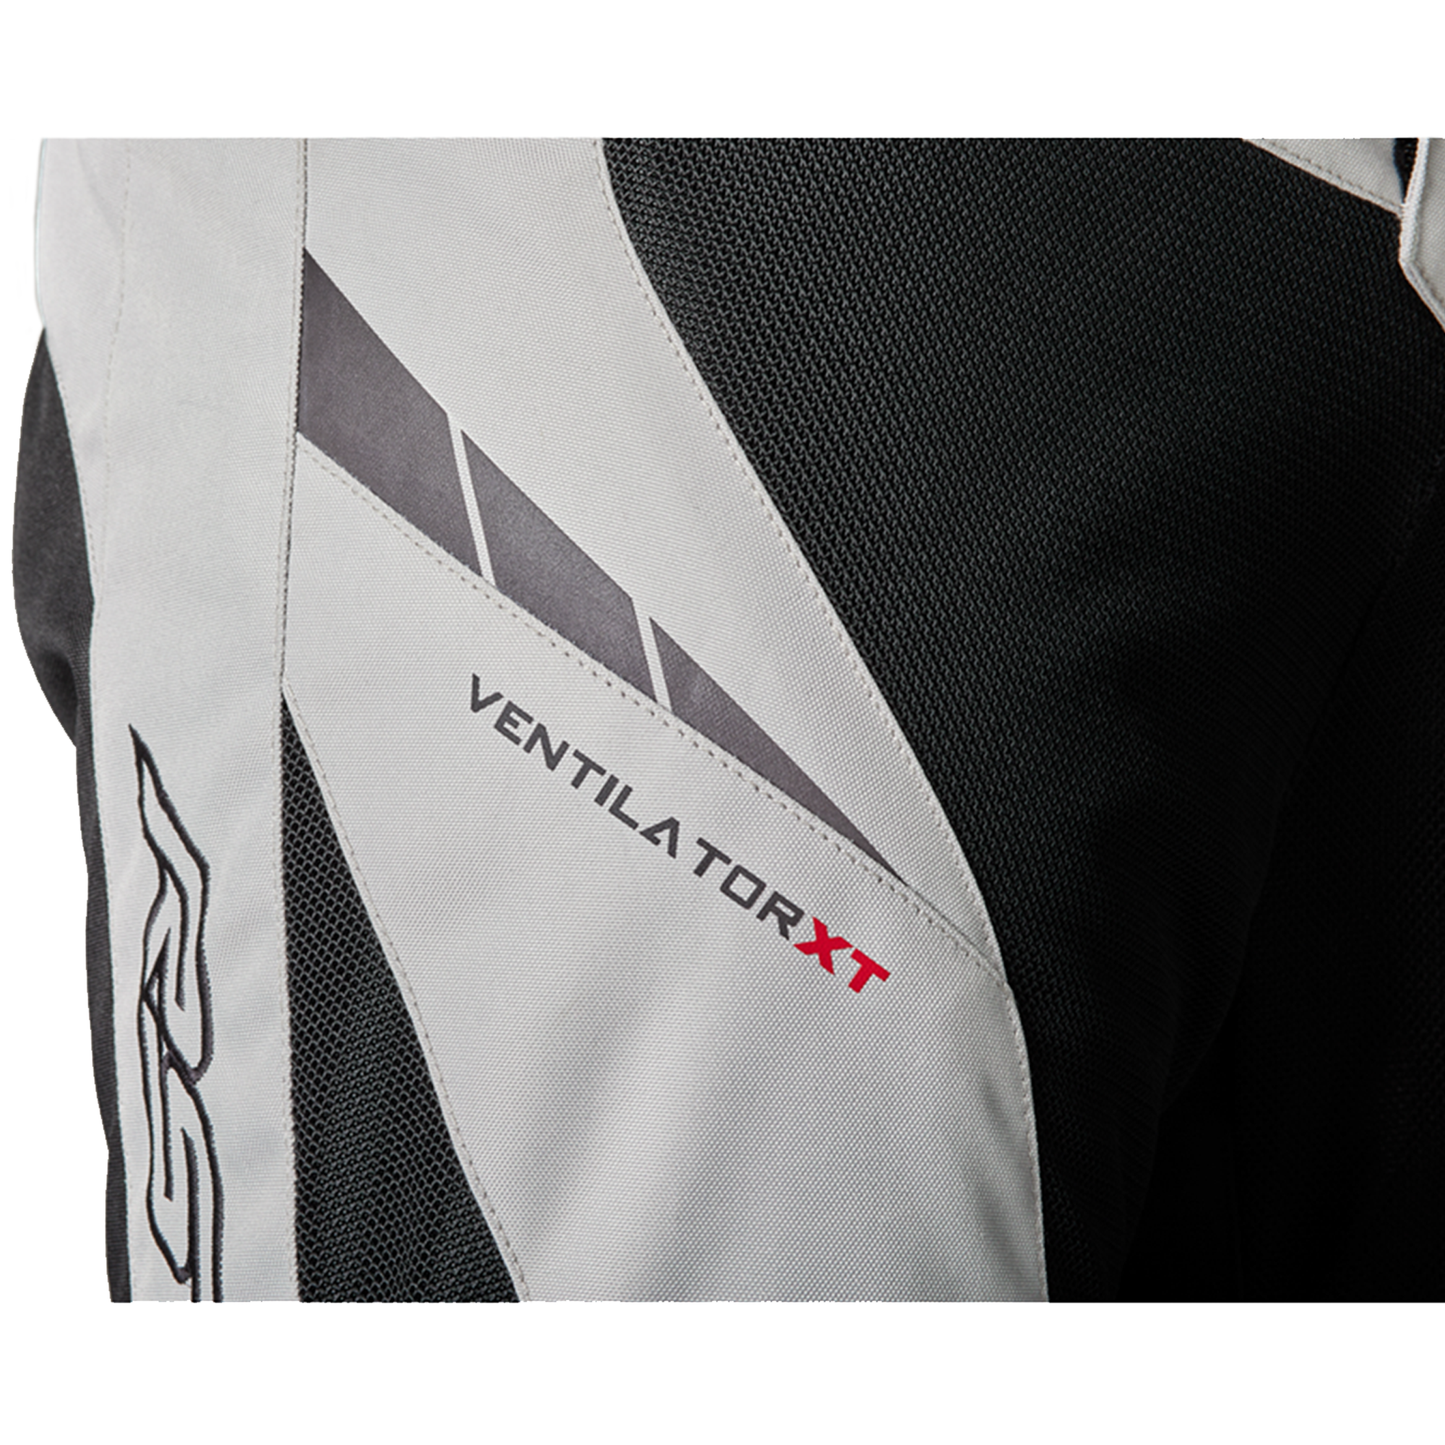 RST Ventilator XT Men's Textile Regular Jeans - Silver/Black